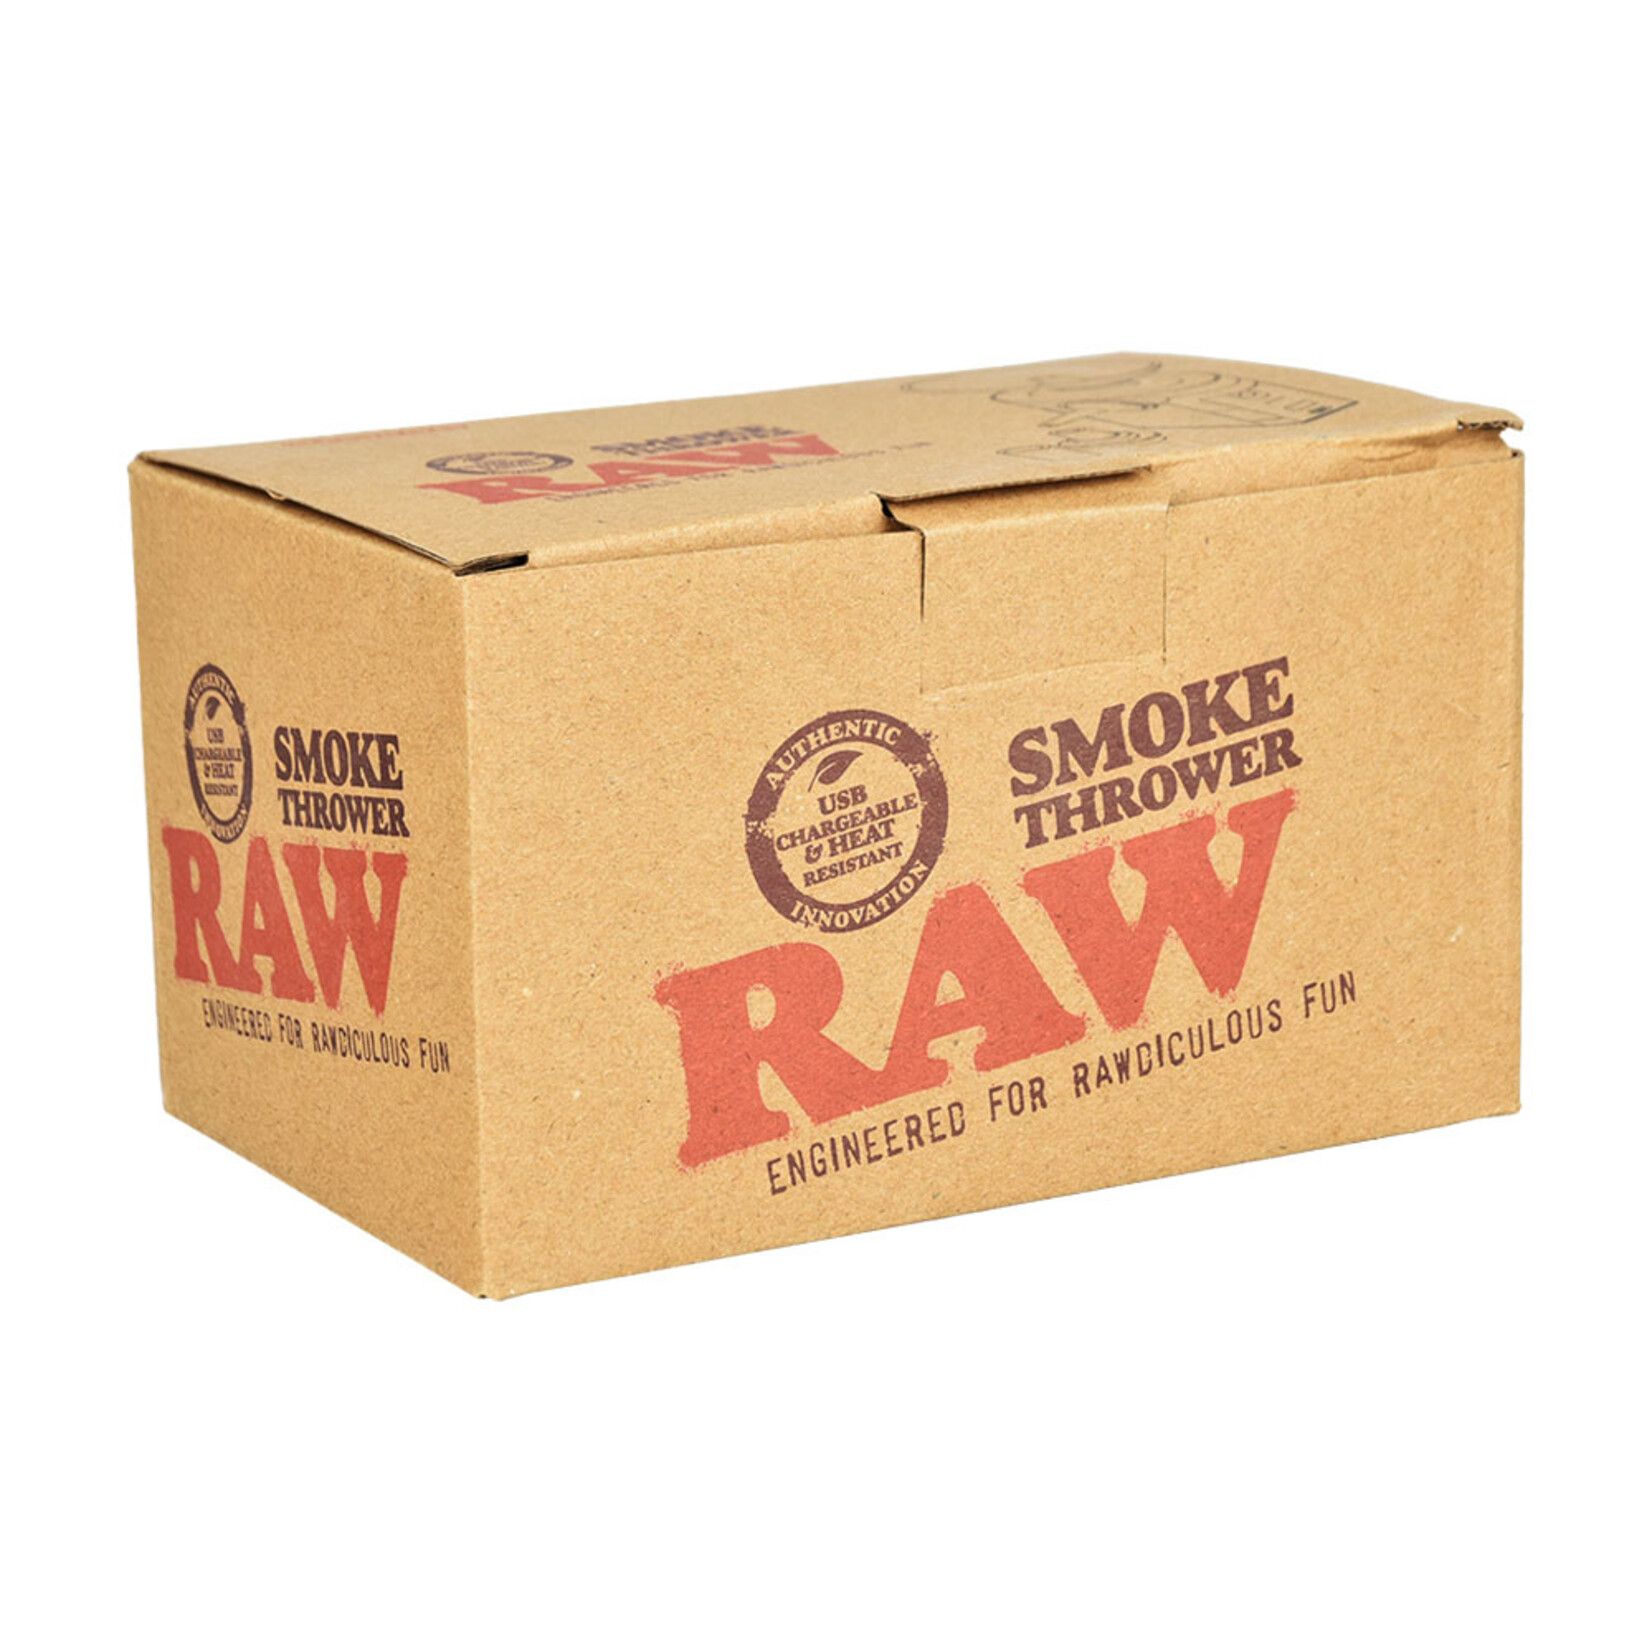 RAW Raw smoke thrower